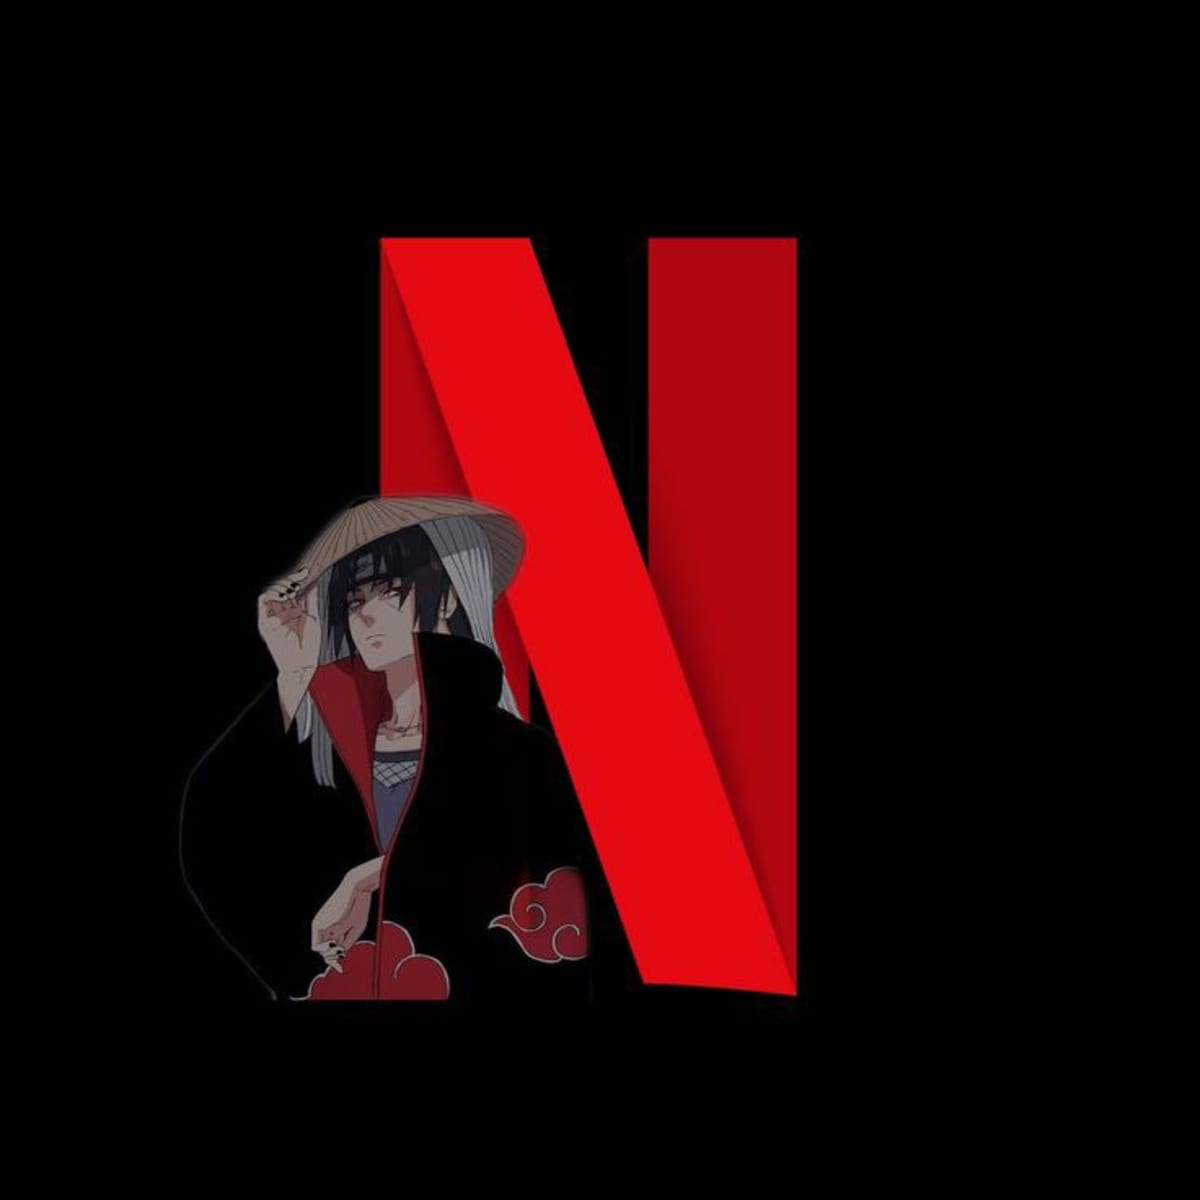 How To Watch HAIKYU!! All Seasons (1-5) on Netflix in 2023